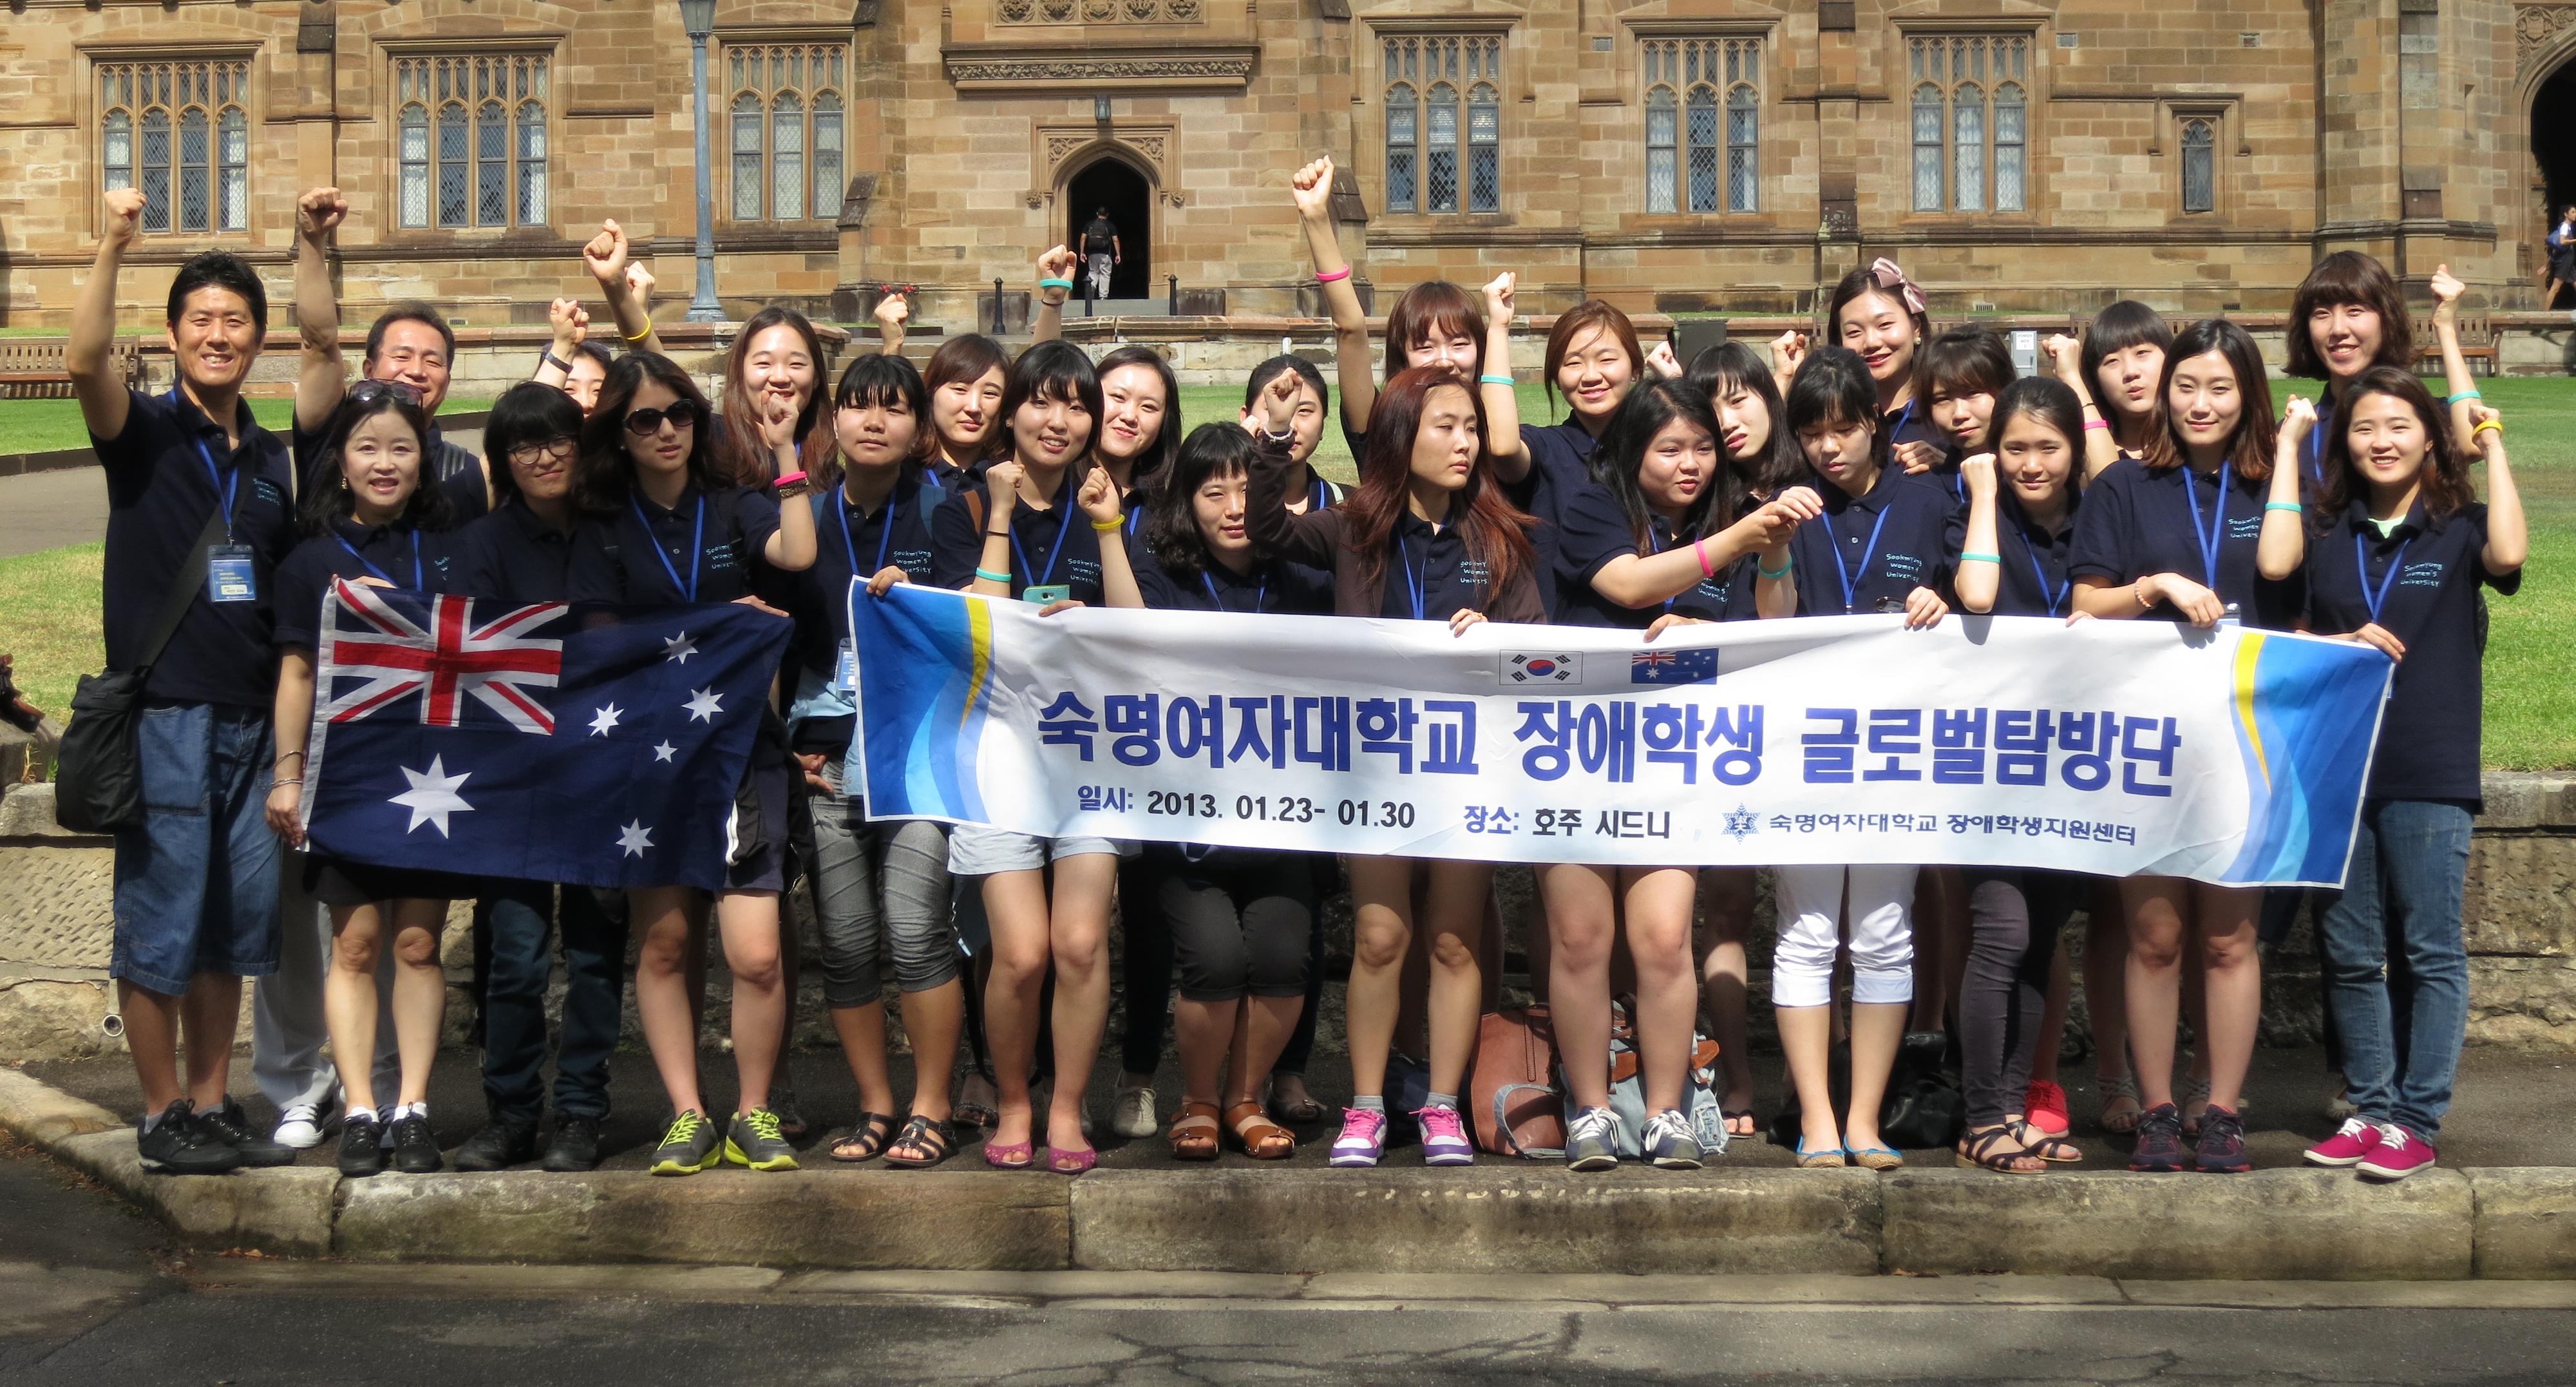 Sookmyung Challenger Global Explorer Team Realized Dreams in Sydney, Australia